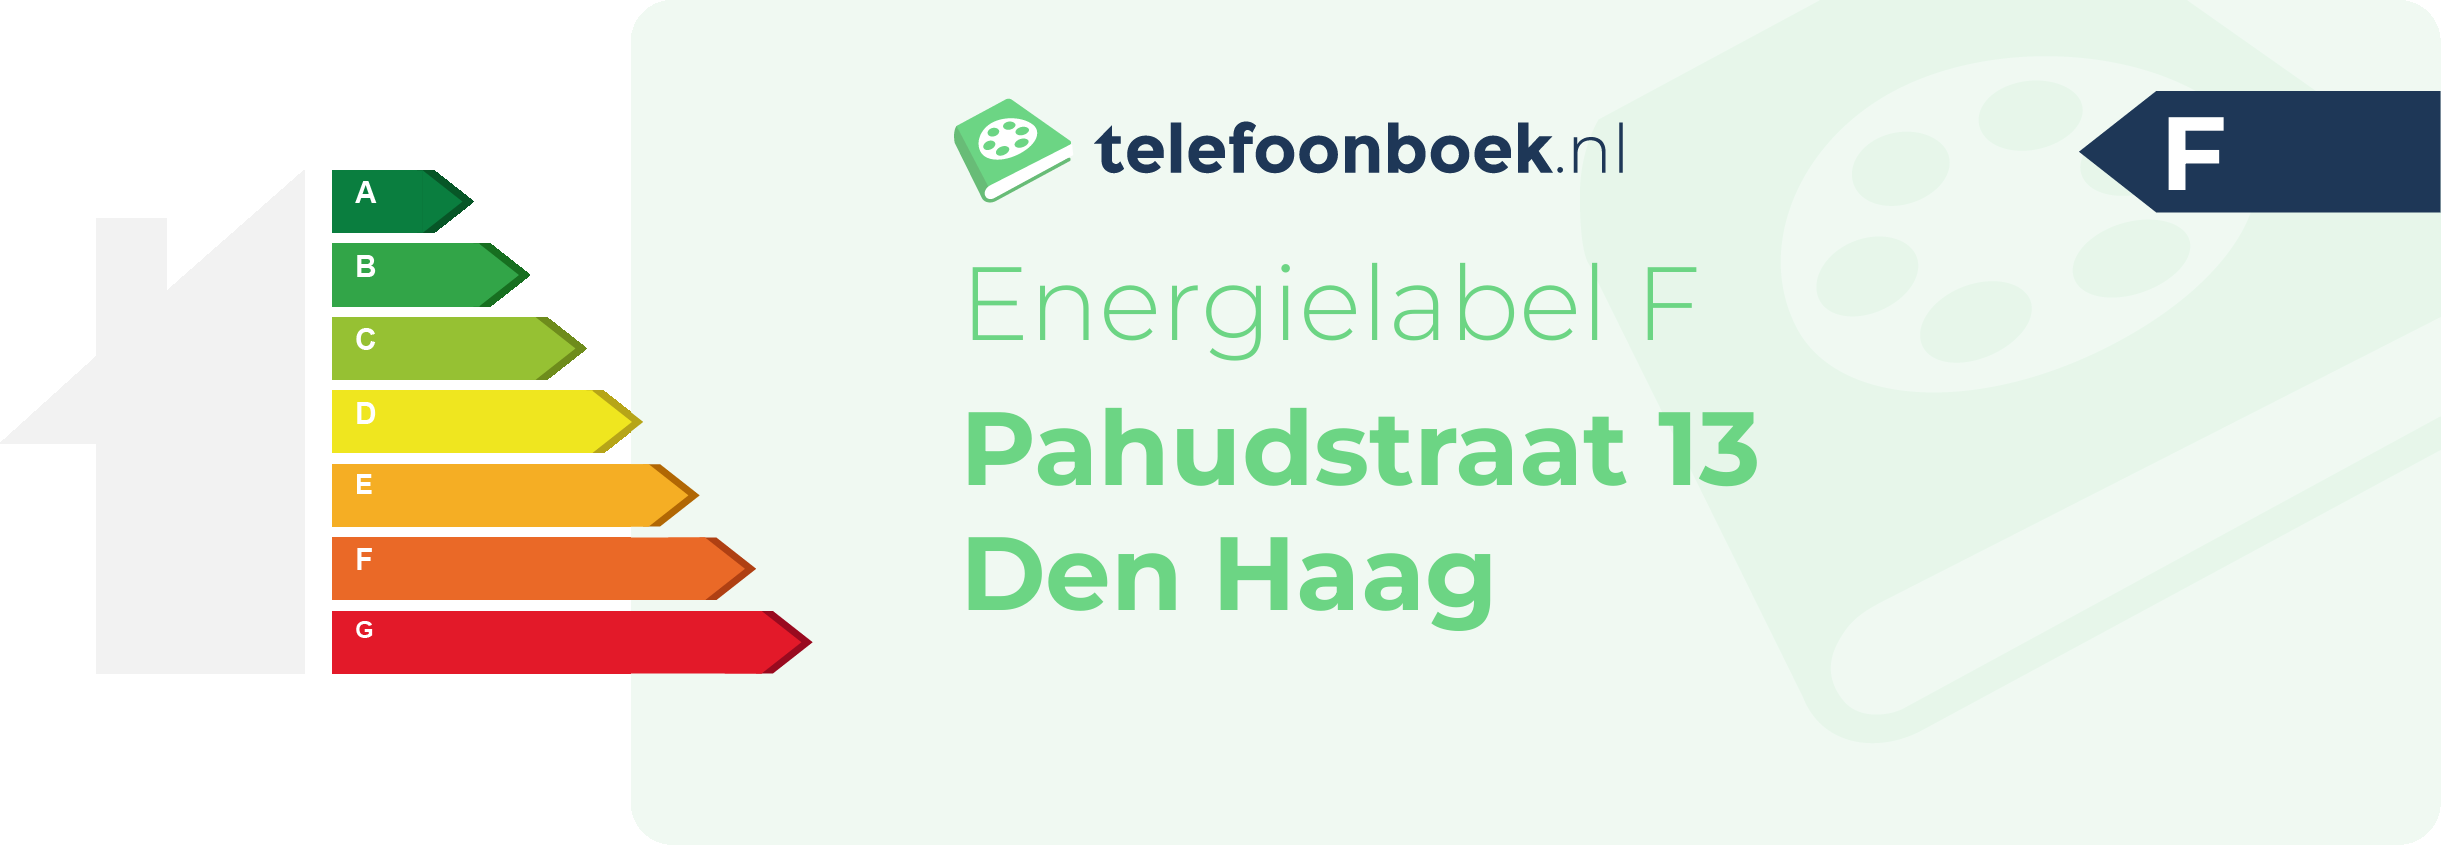 Energielabel Pahudstraat 13 Den Haag